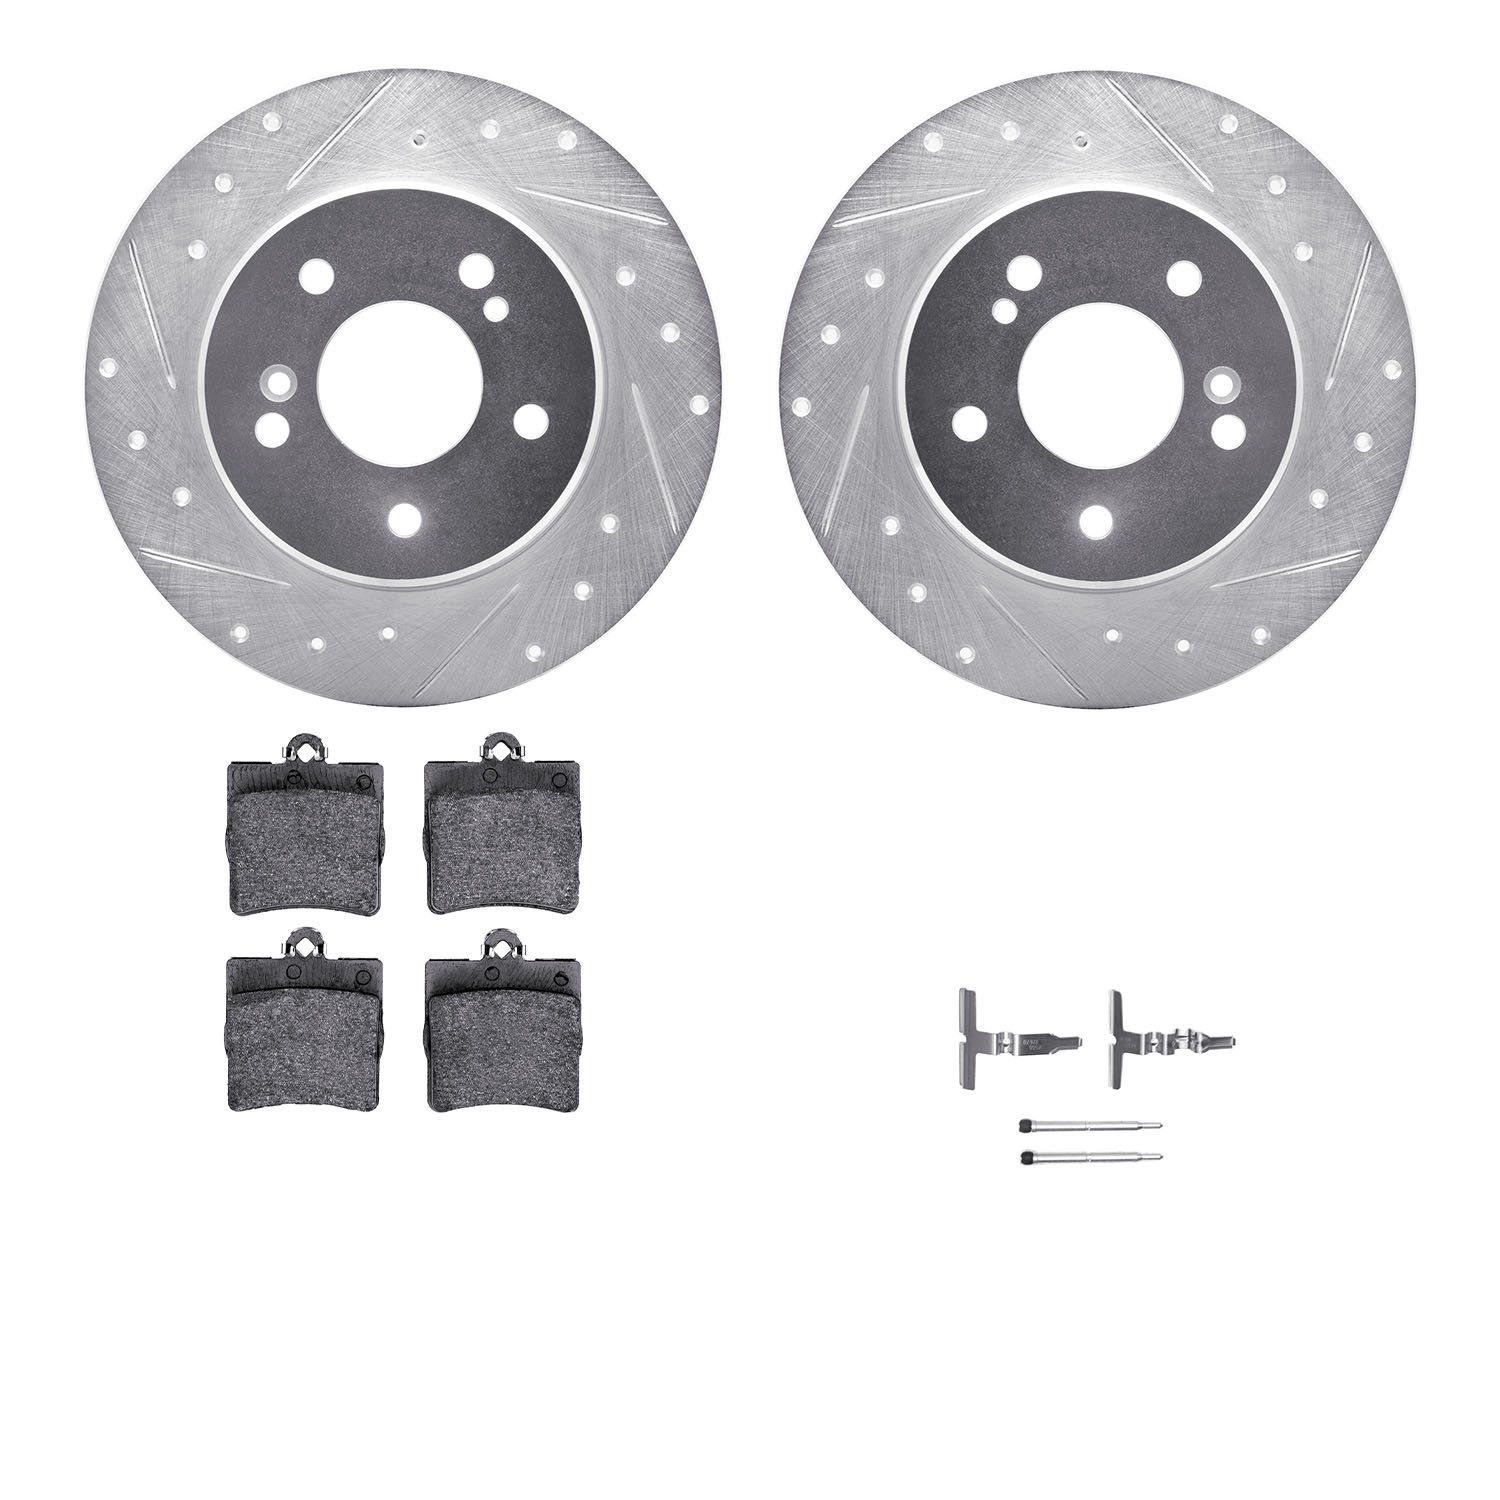 7312-63068 Drilled/Slotted Brake Rotor with 3000-Series Ceramic Brake Pads Kit & Hardware [Silver], 1996-2015 Multiple Makes/Mod